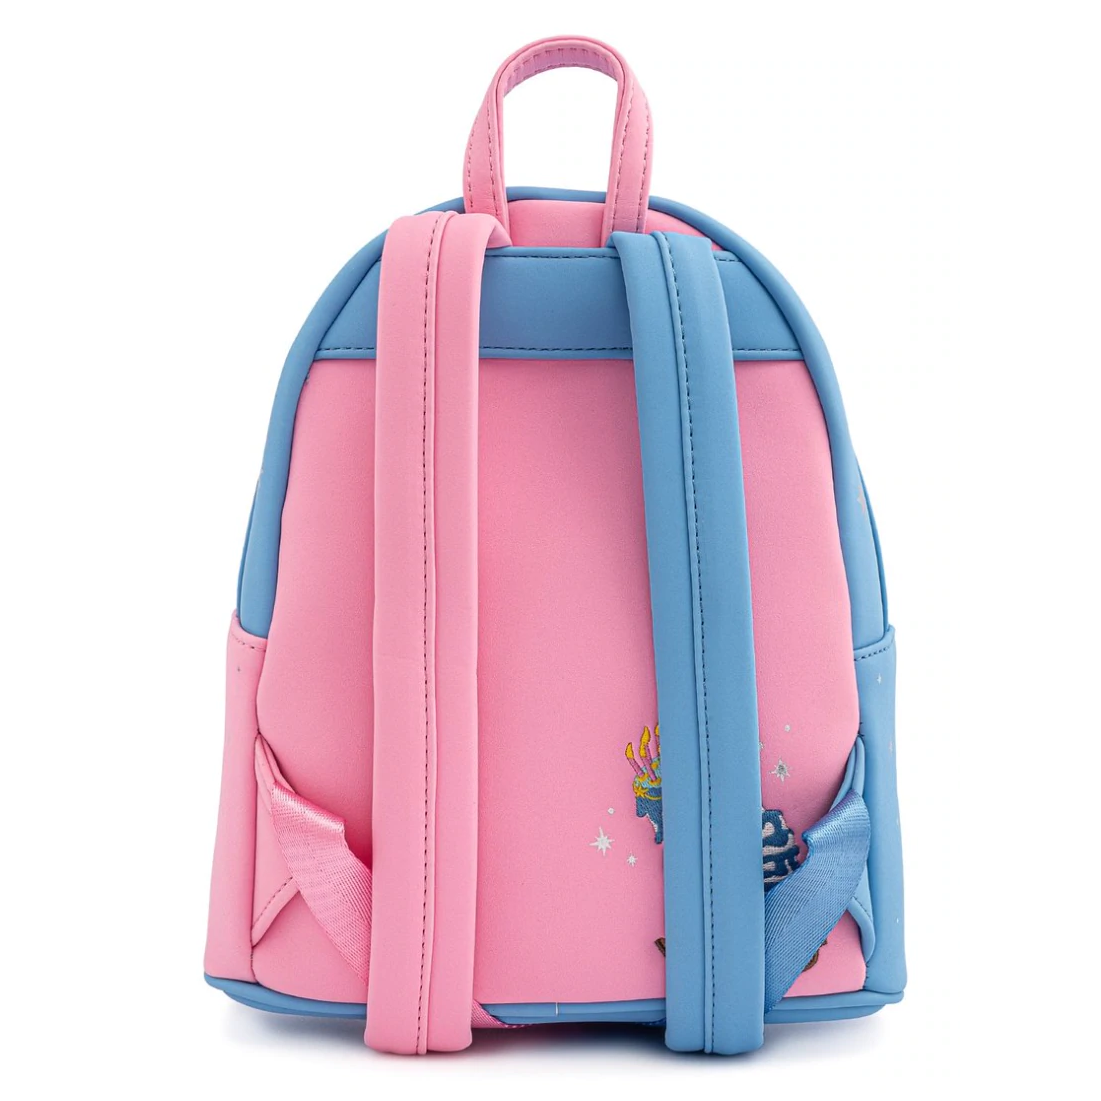 Sleeping beauty fairies loungefly mini backpack  Sleeping beauty fairies,  Louis vuitton twist bag, Shoulder bag